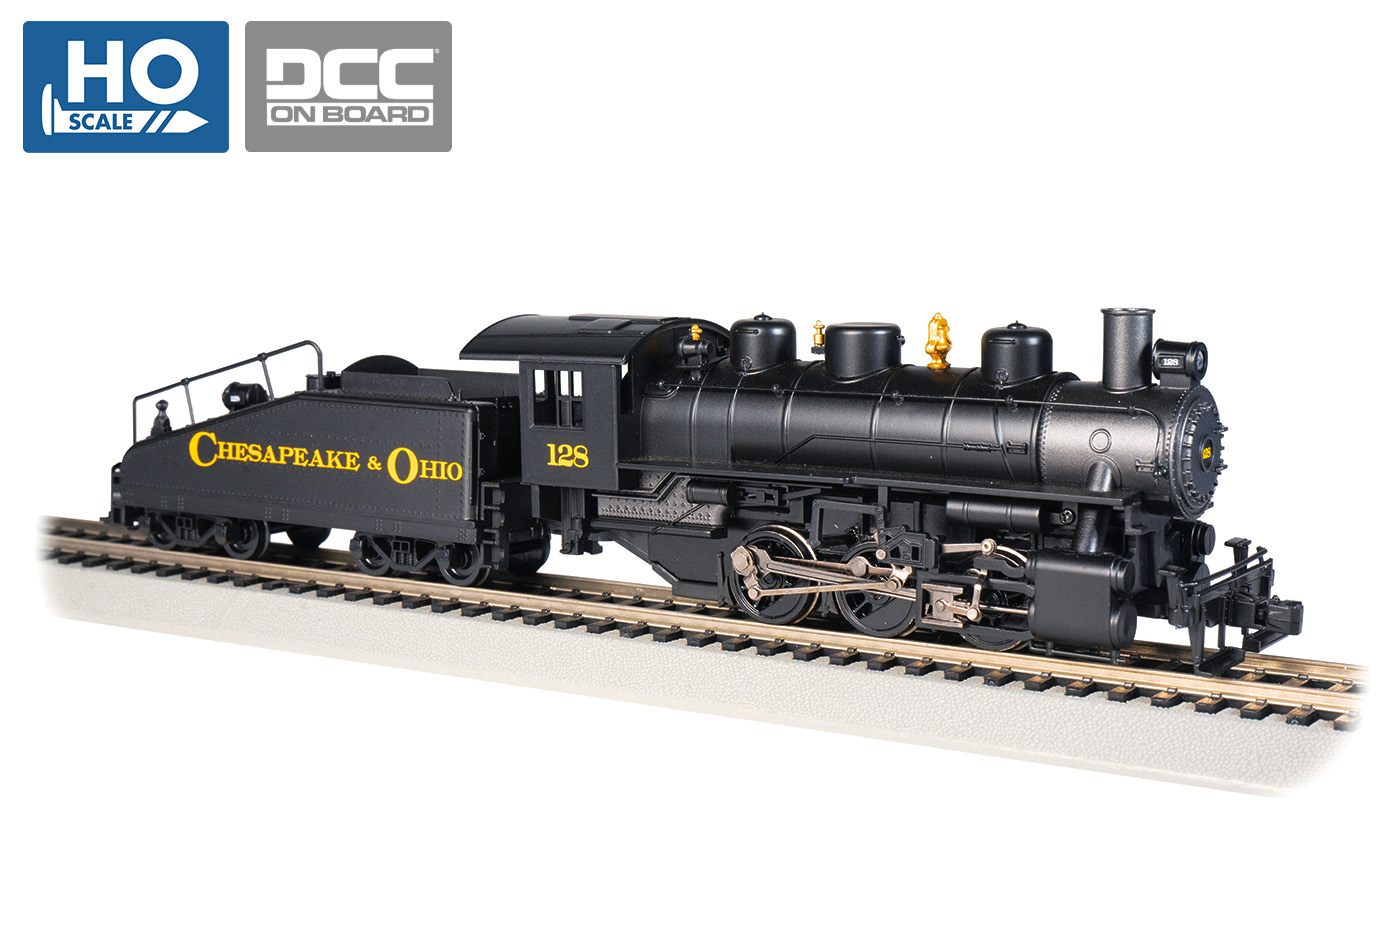 Bachmann HO Scale Train Steam LOCO 4-6-0 Baldwin DCC Ready NYC #1238 52201 for sale online 